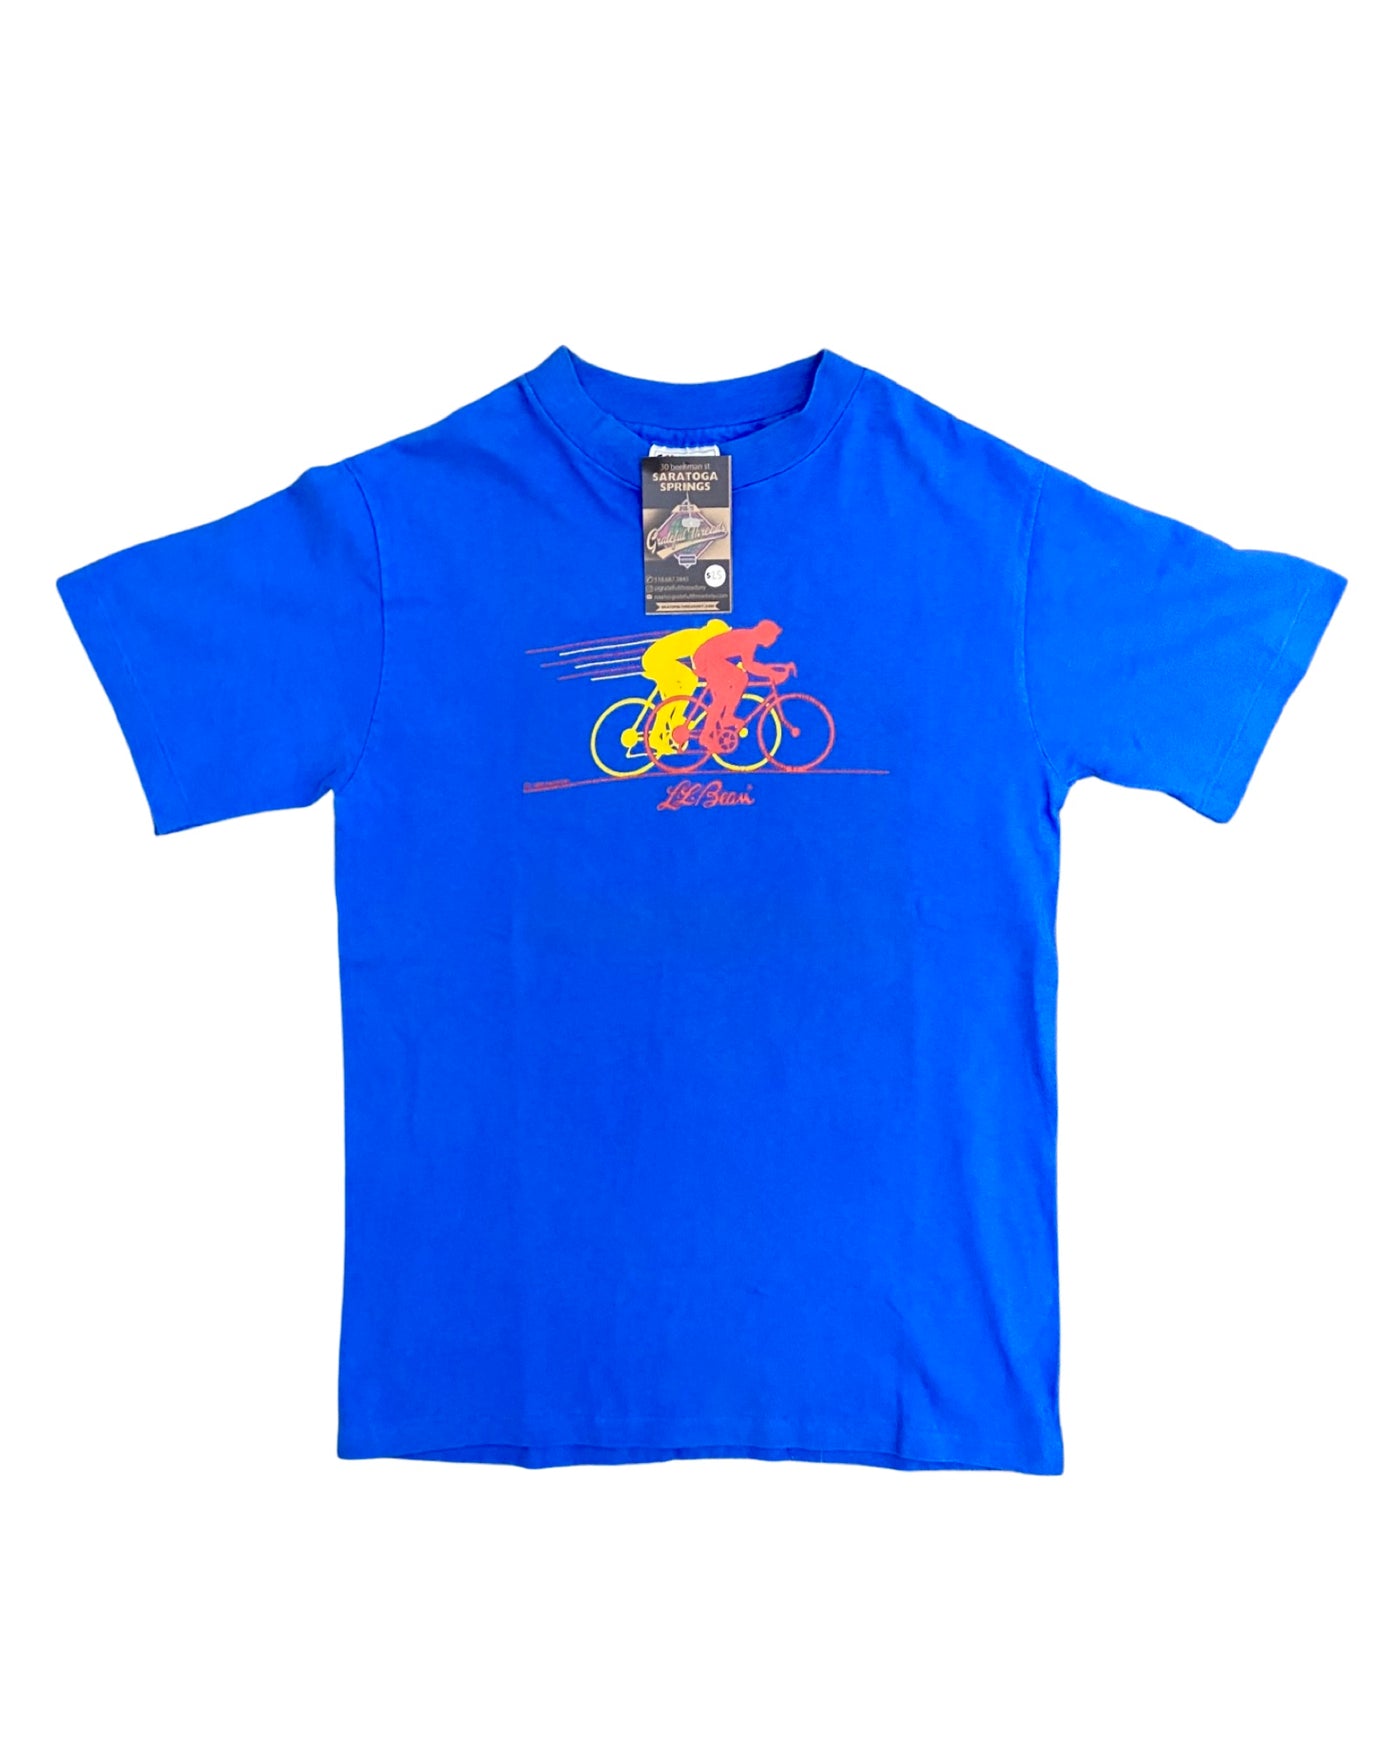 Vintage 1986 LL Bean Cycling T-Shirt